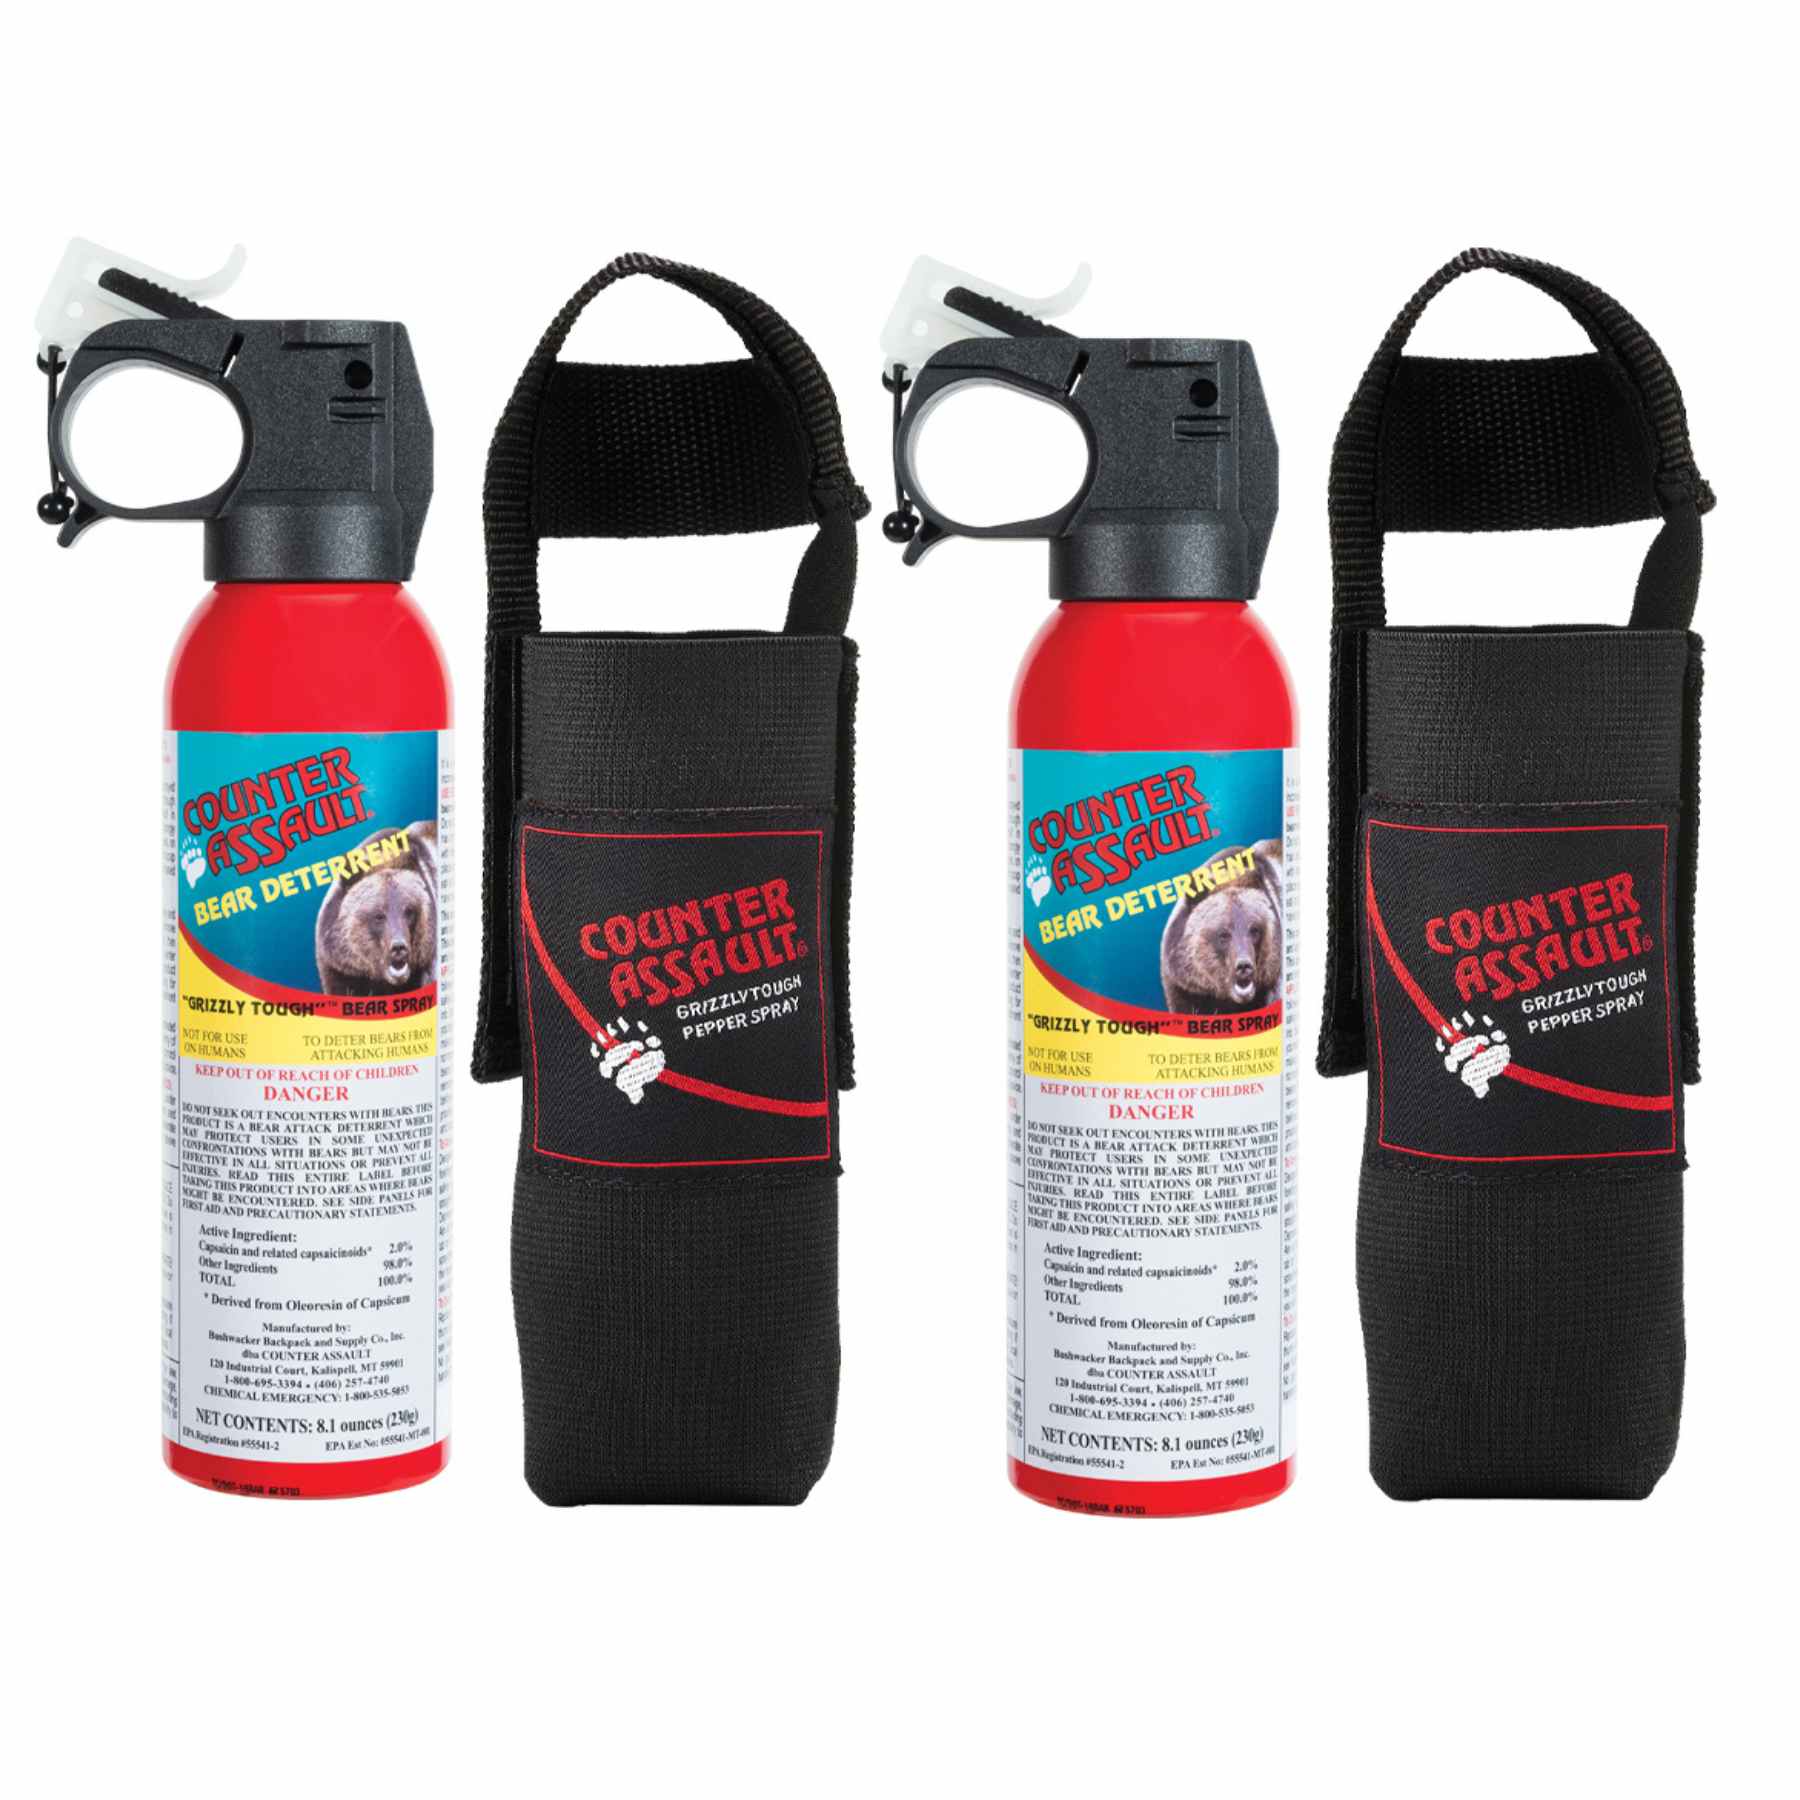 2 Counter Assault bear deterrent spray with holster